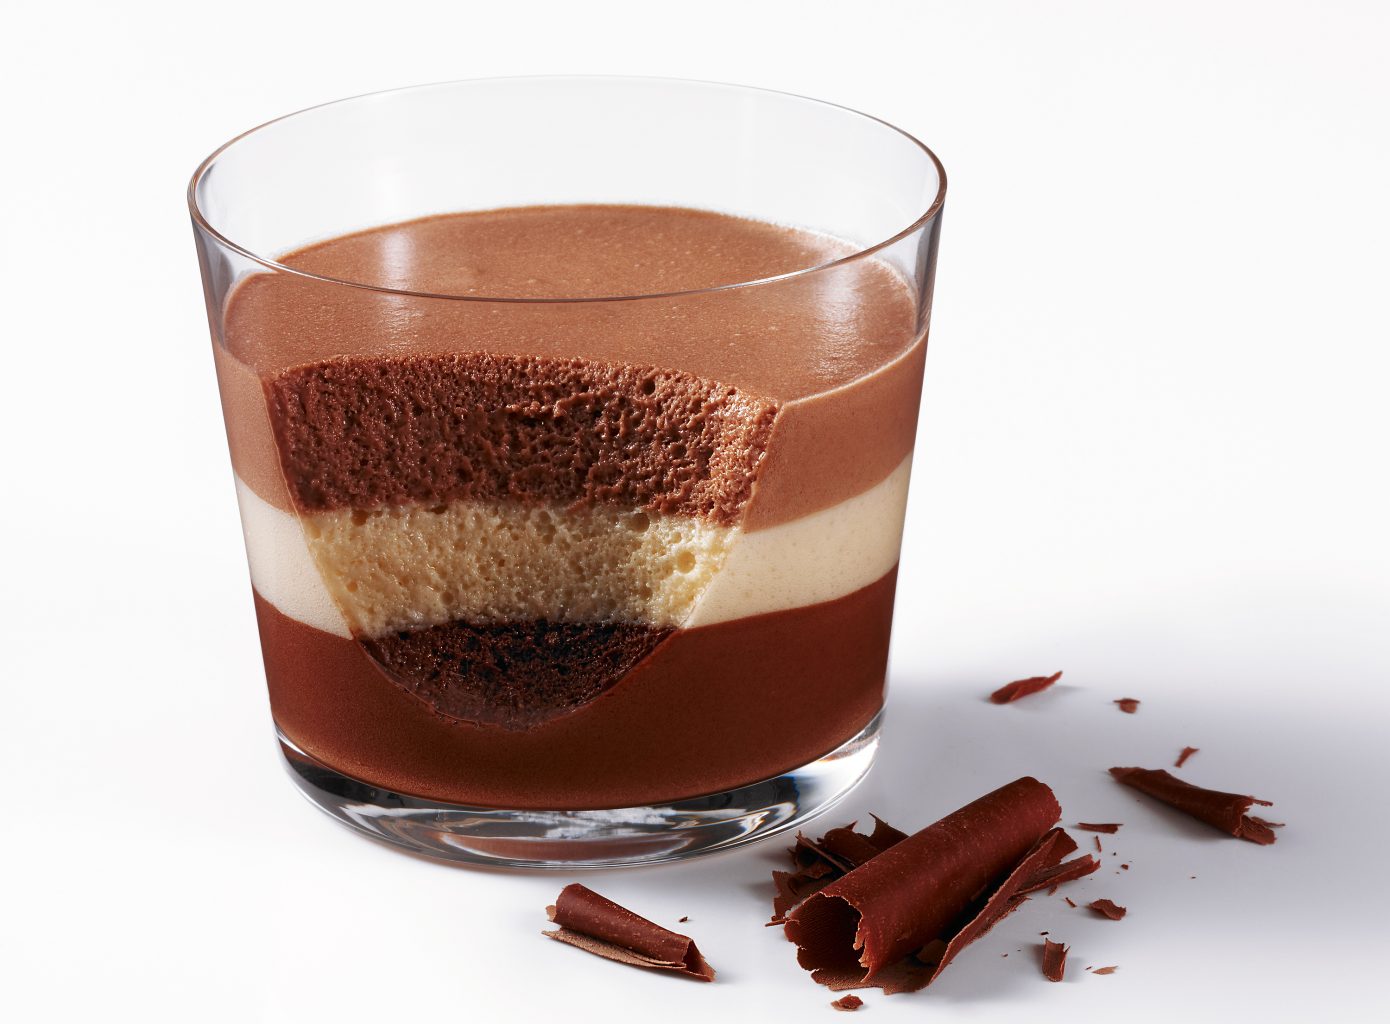 Schokoladen Mousse Triple, sweets dessert - Kai Stiepel Photography